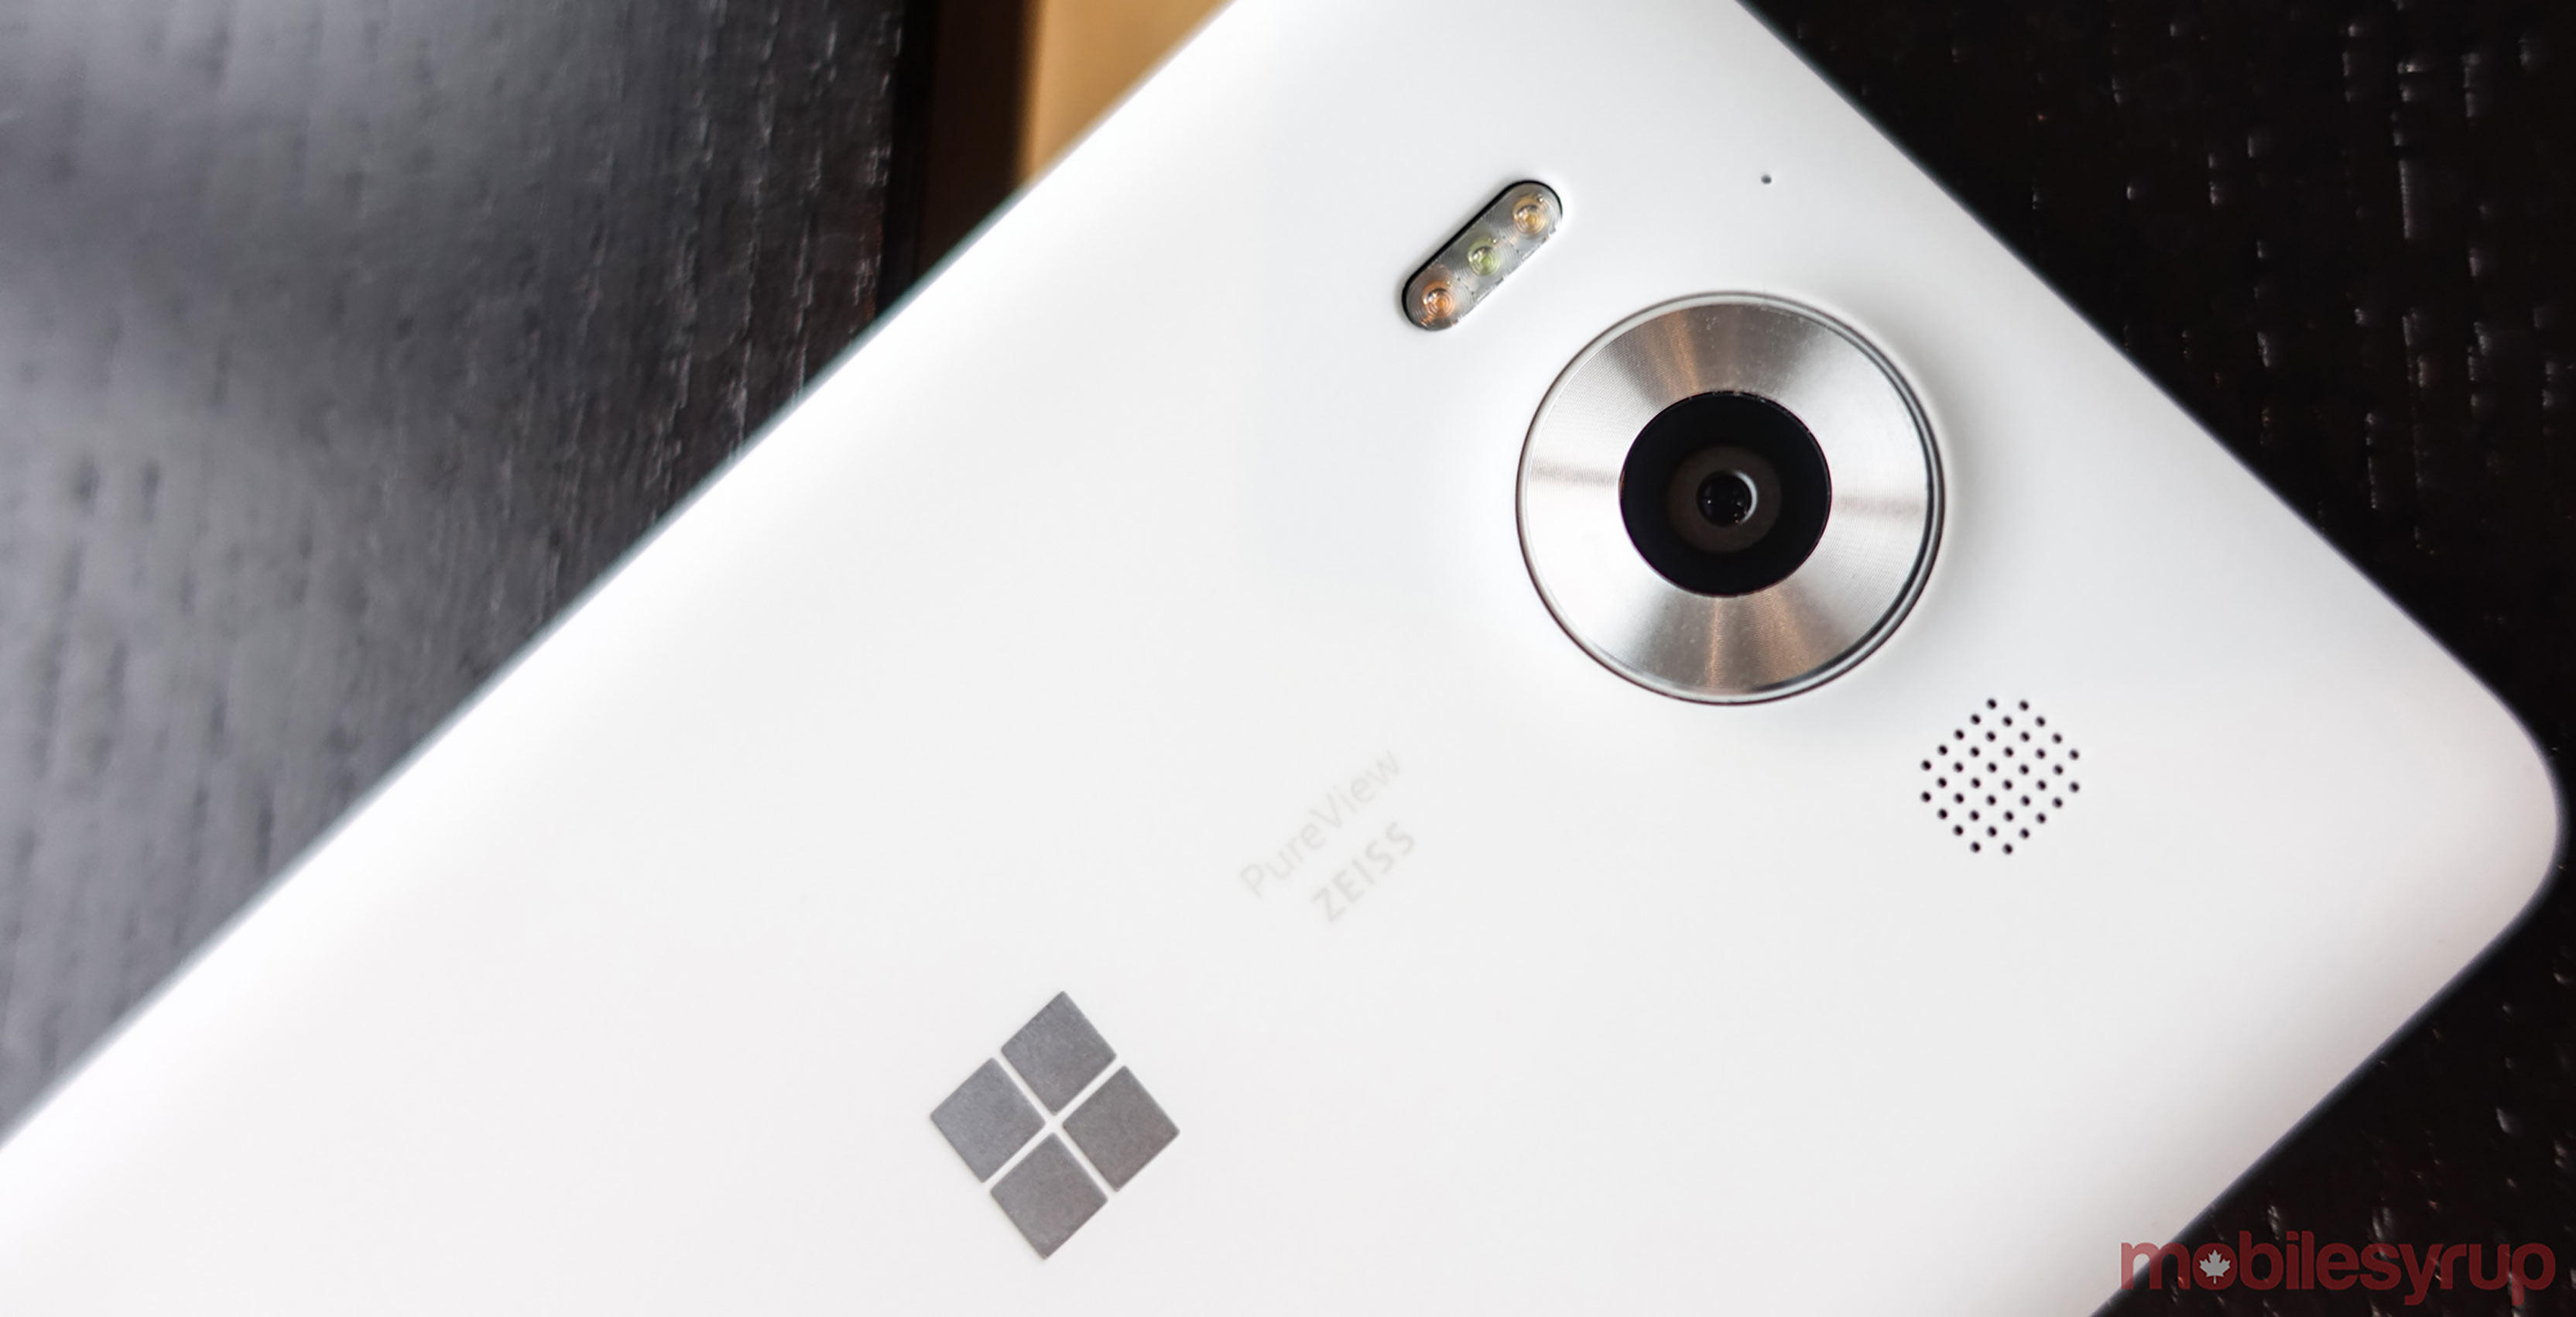 Microsoft Lumia 950 device